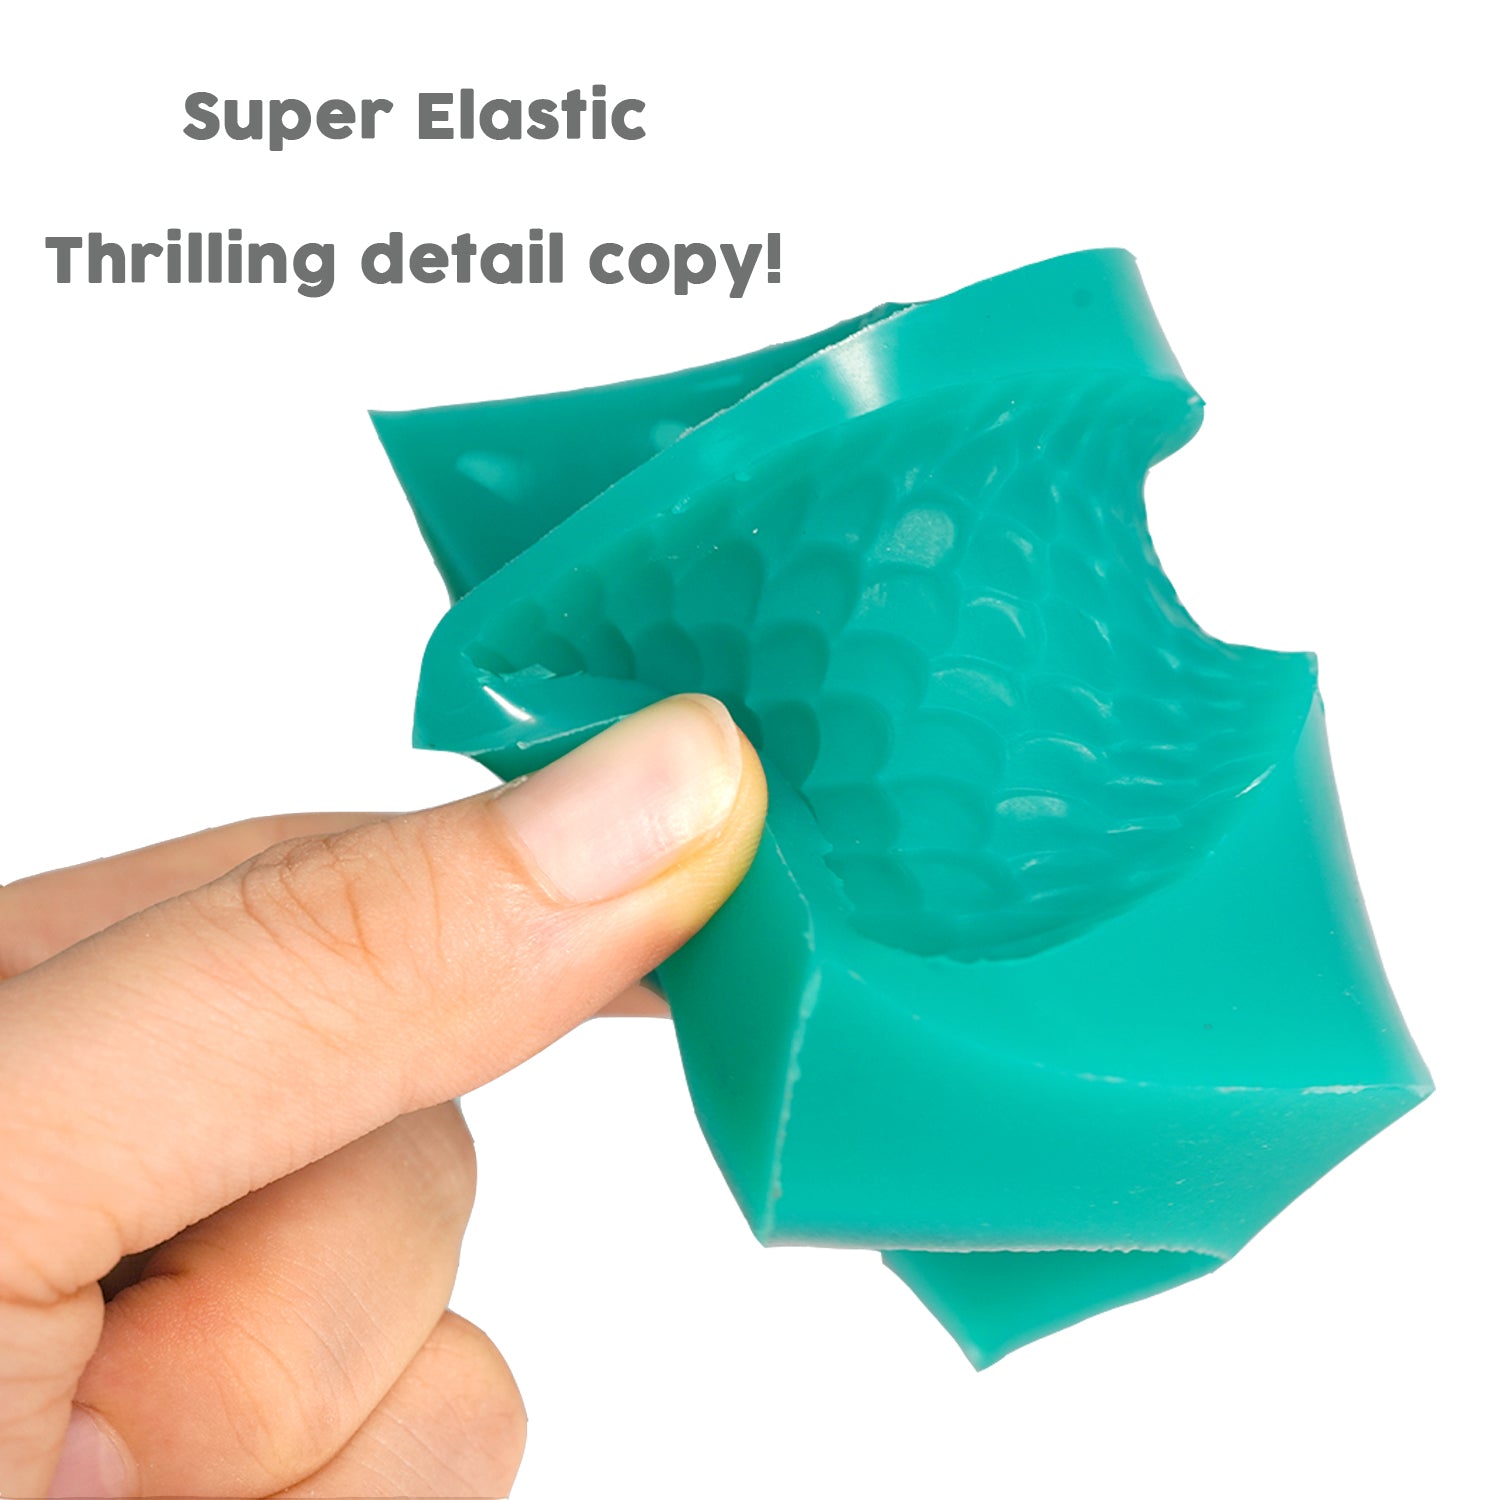 BBDINO Super Elastic Silicone Mold Making Rubber Platinum Trial Kit –  BBDINO Direct